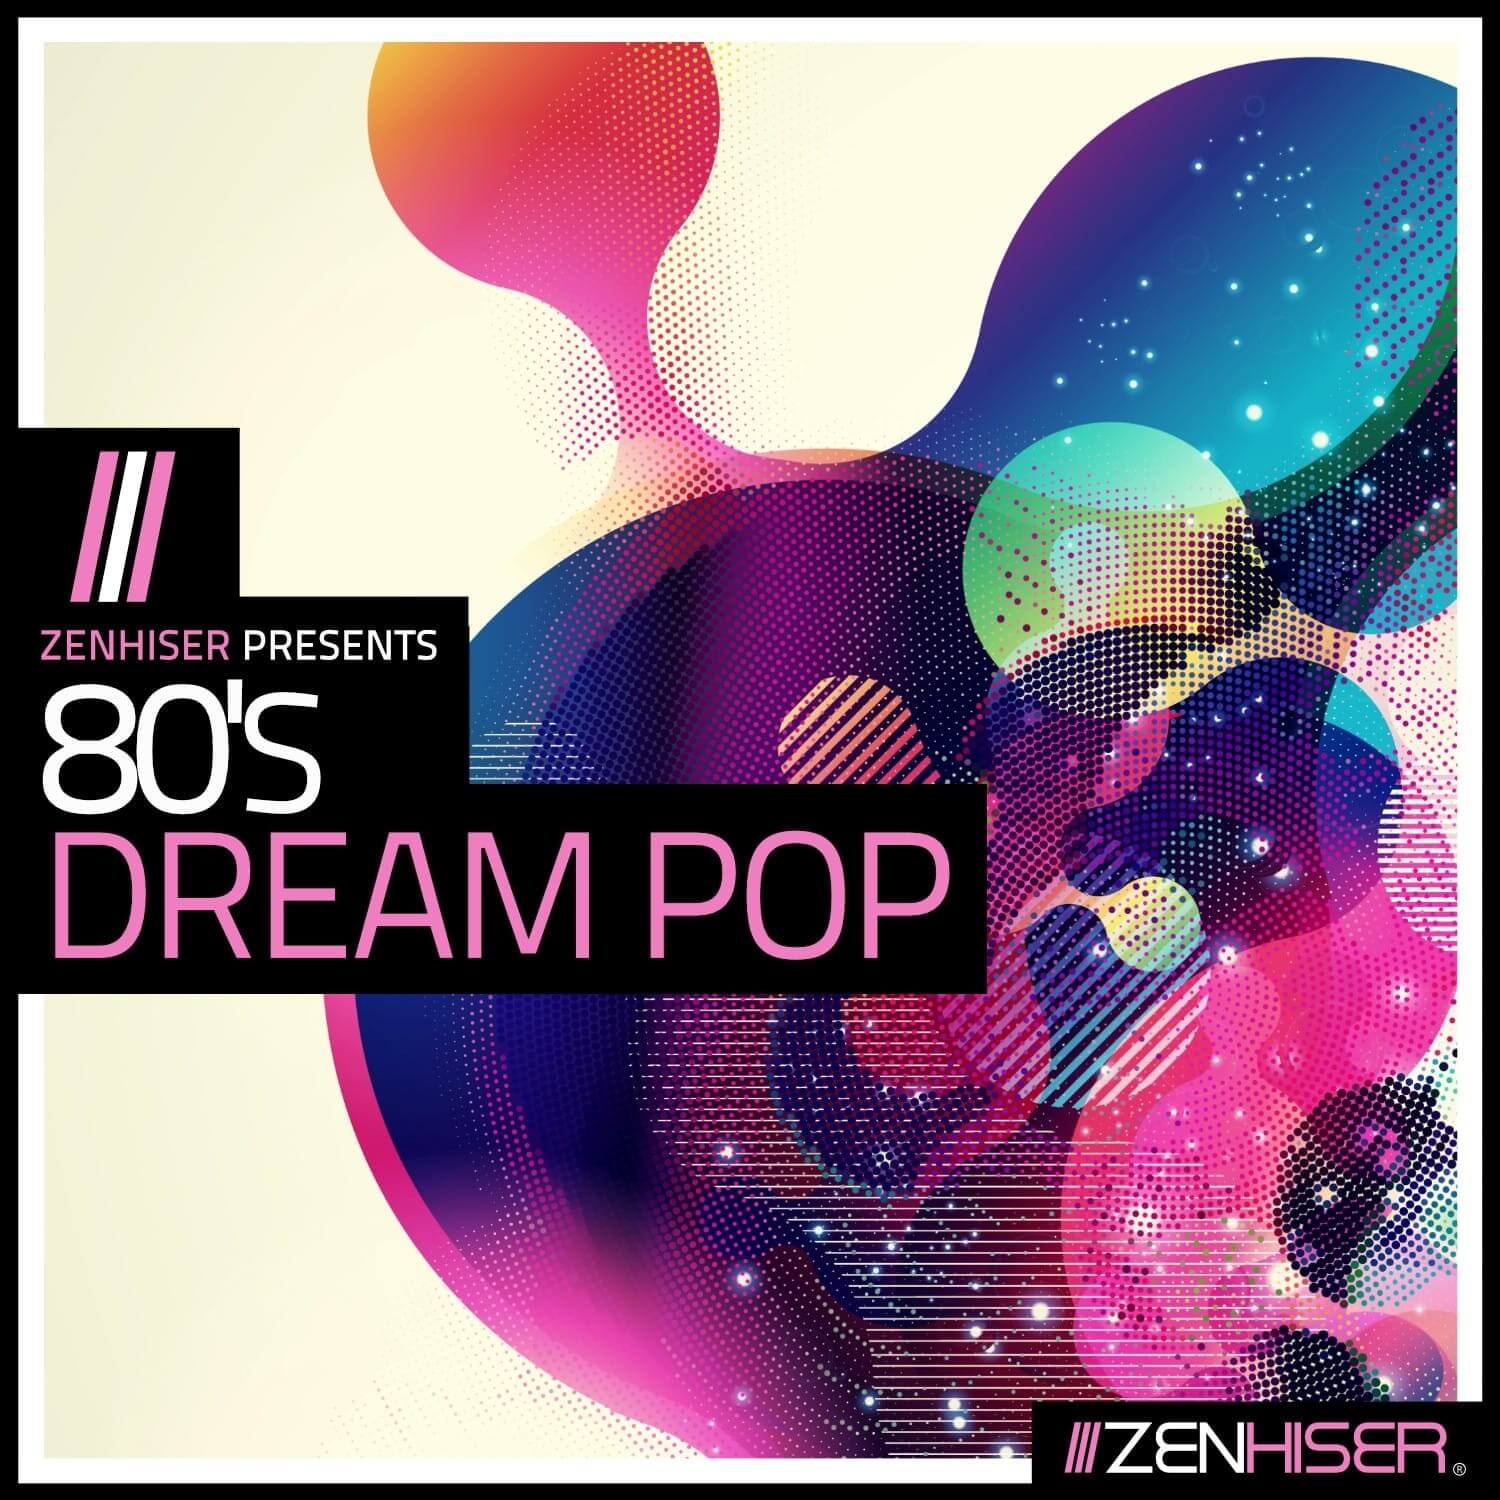 Дрим поп. Сборник Dream Pop. Record Dream Pop. Zenhiser 80s Crush.